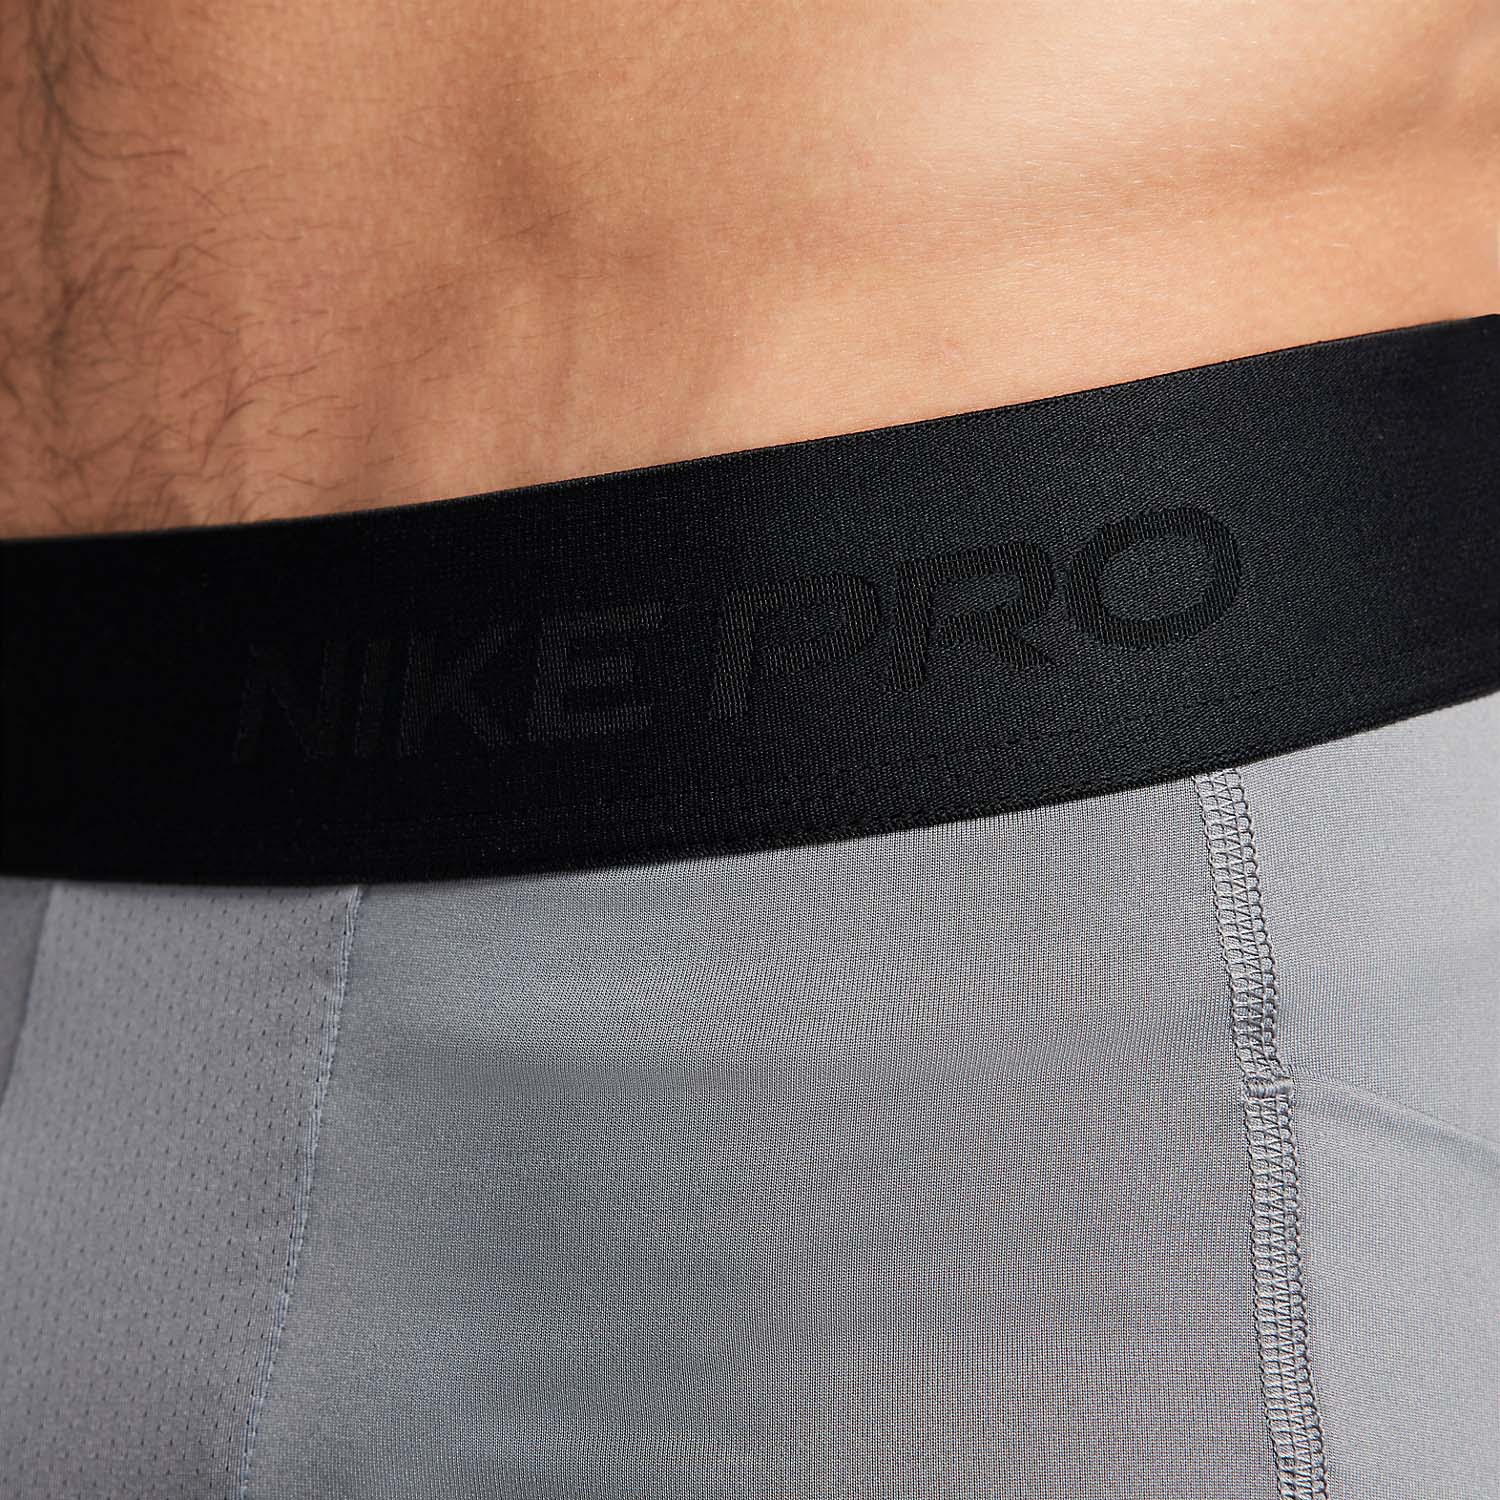 Nike Dri-FIT Pro Calzamaglia Corta - Smoke Grey/Black